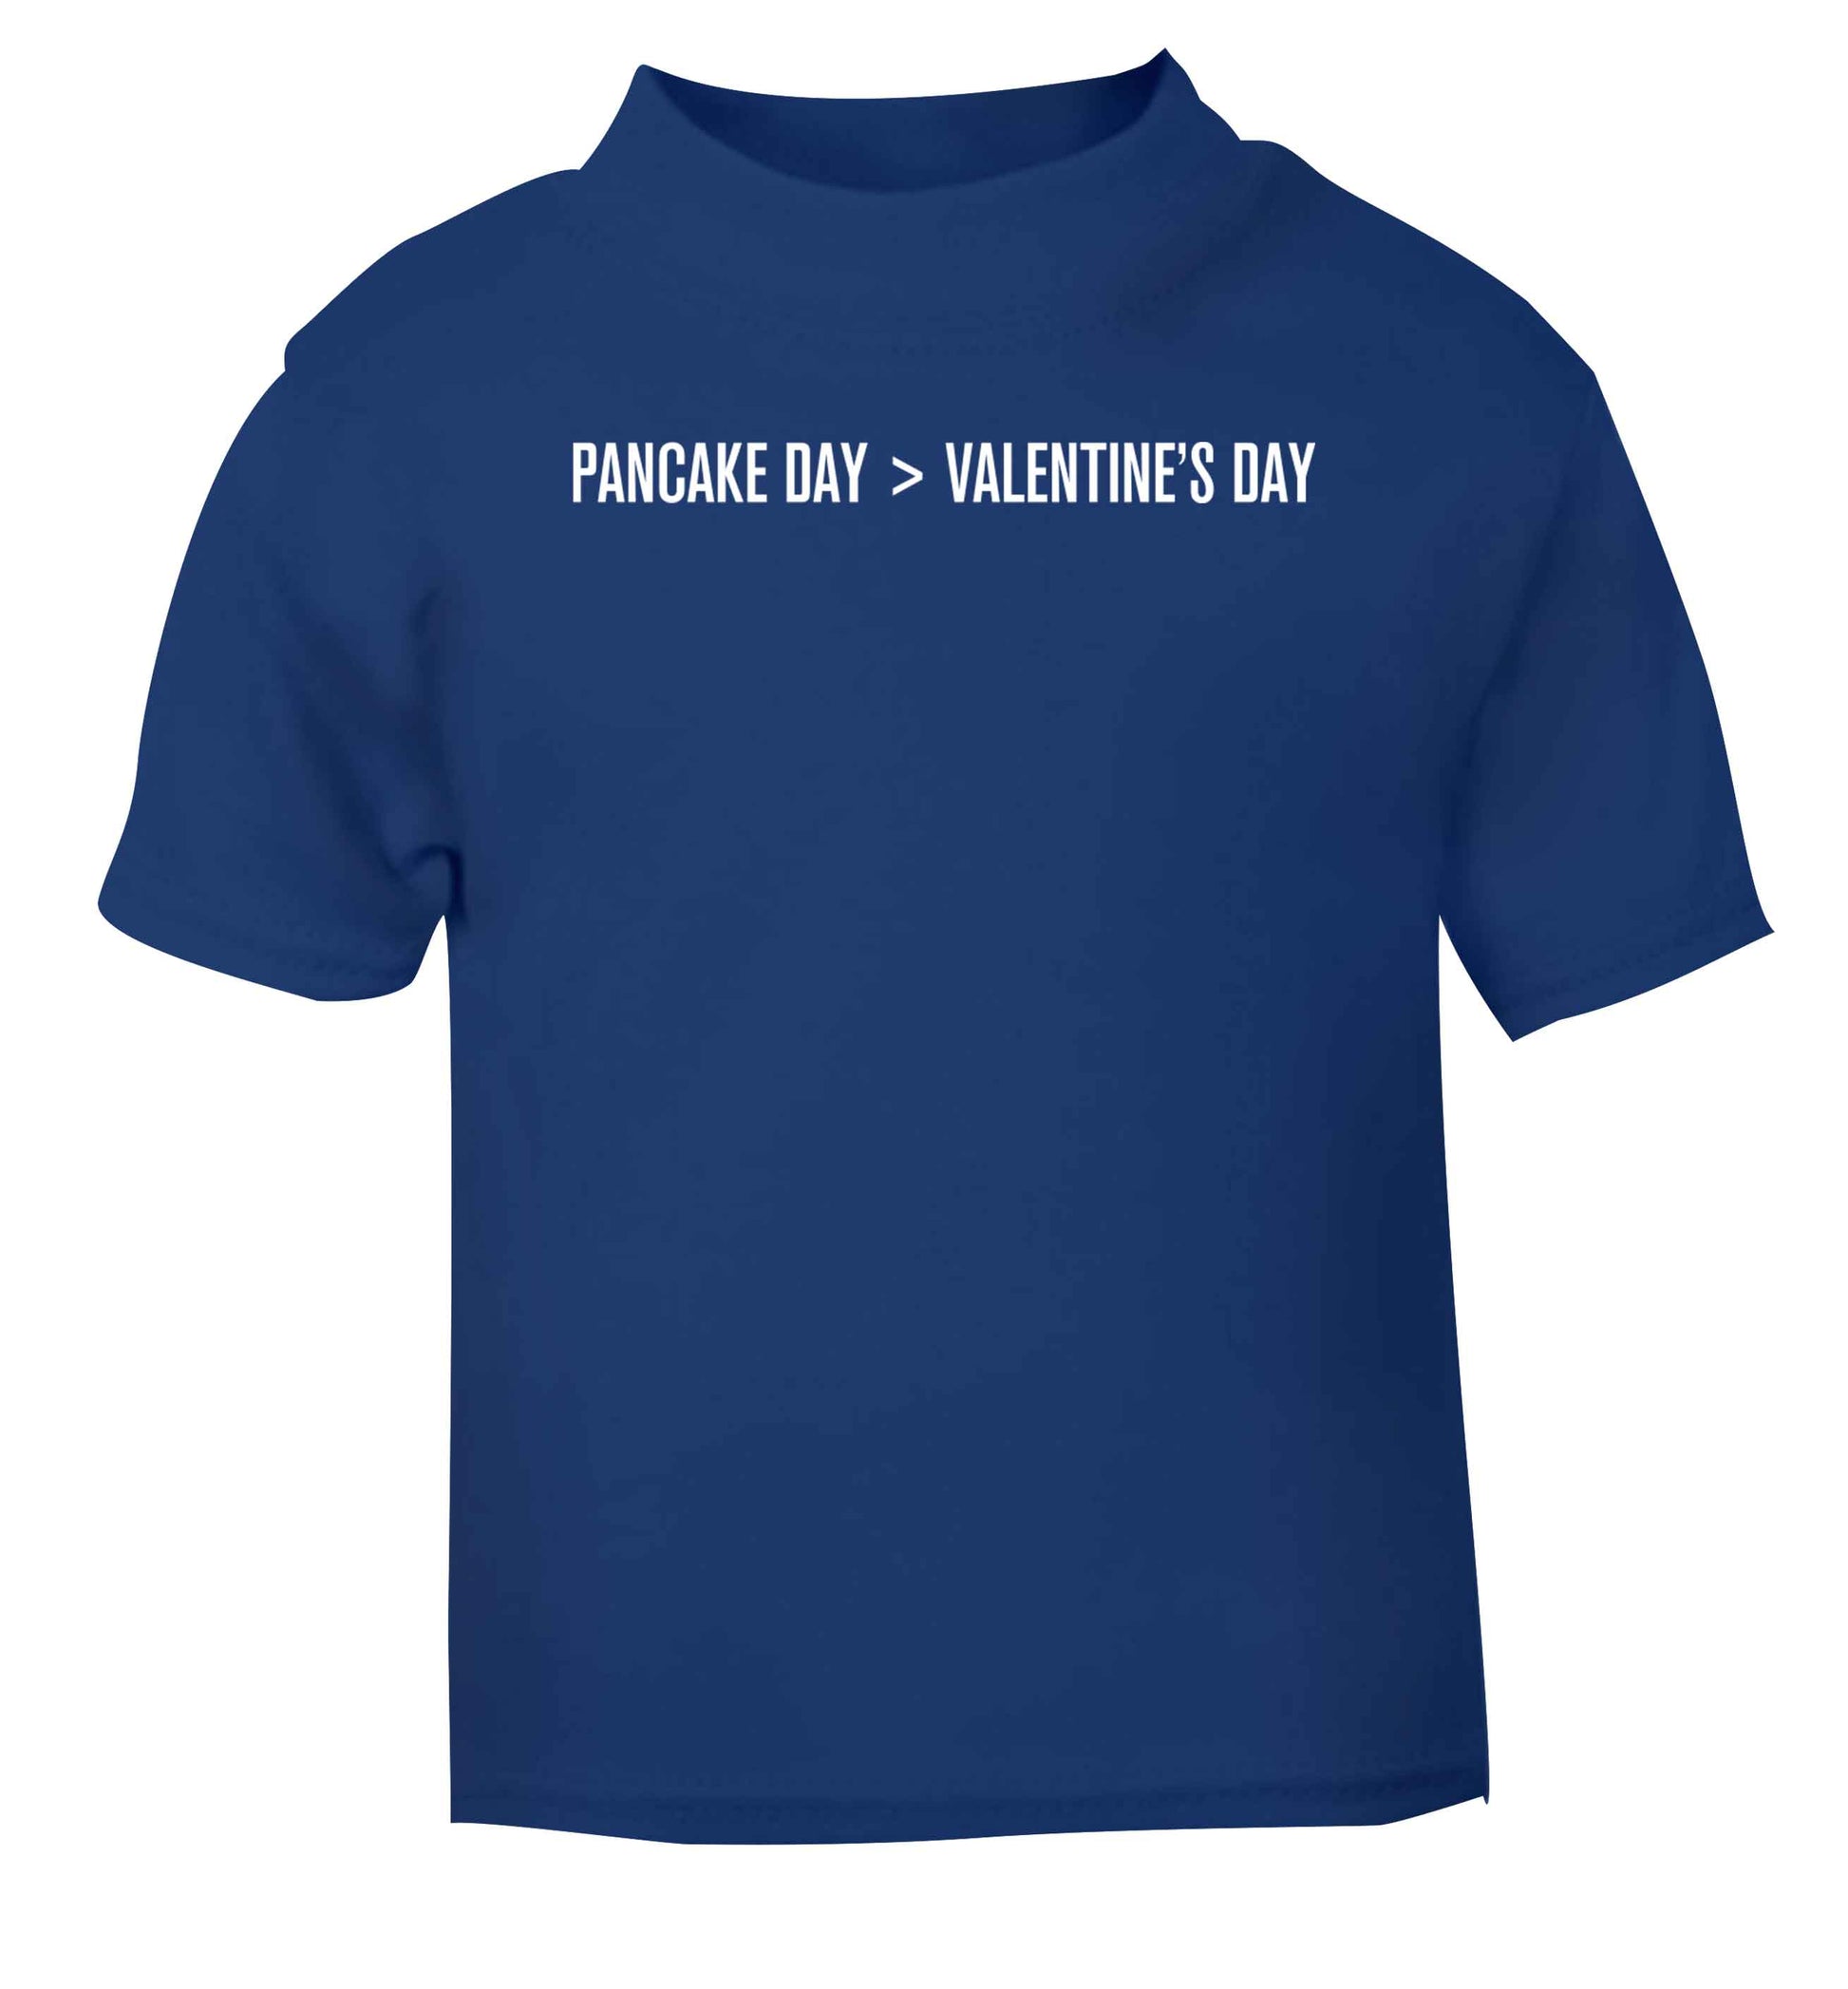 Pancake day > valentines day blue baby toddler Tshirt 2 Years